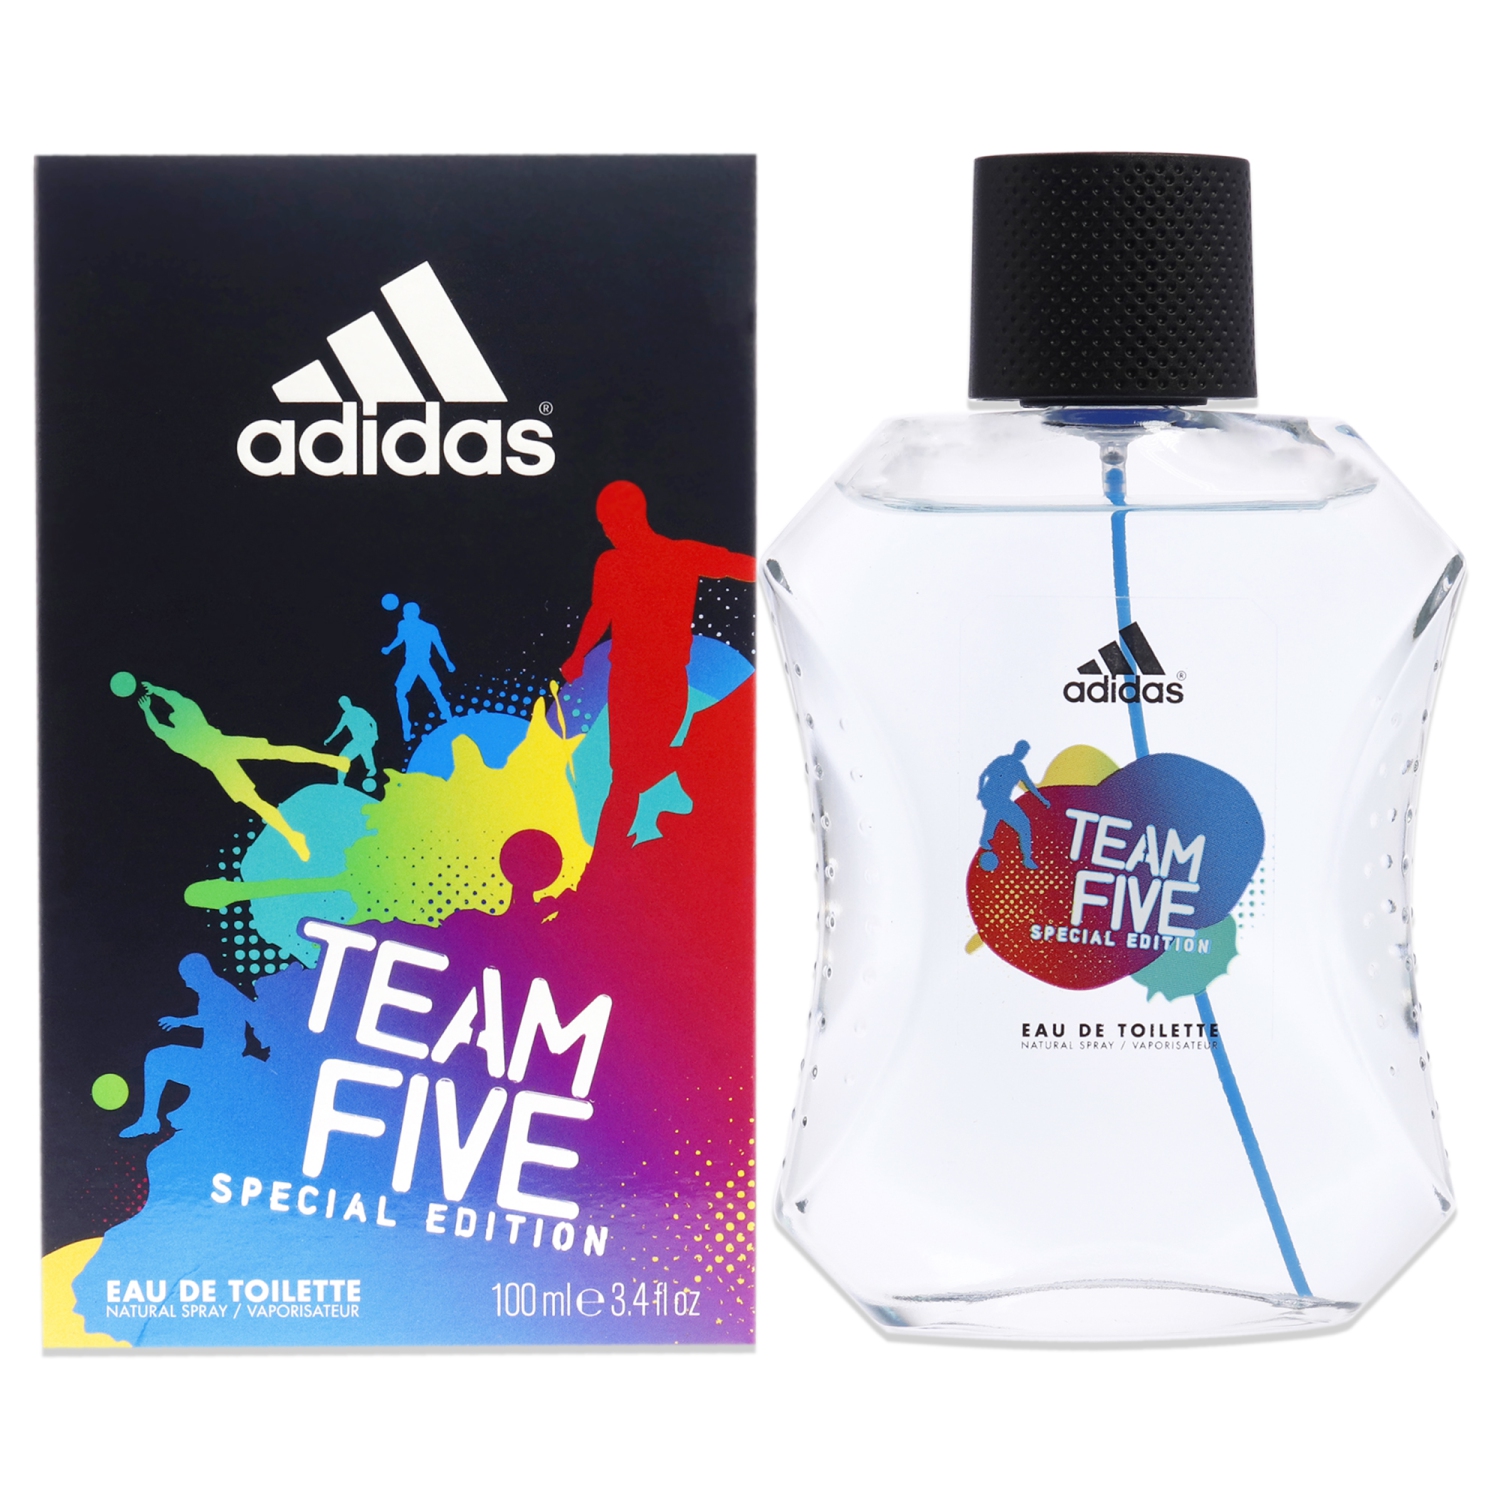 Adidas Team Five by Adidas for Men - 3.4 oz EDT Spray